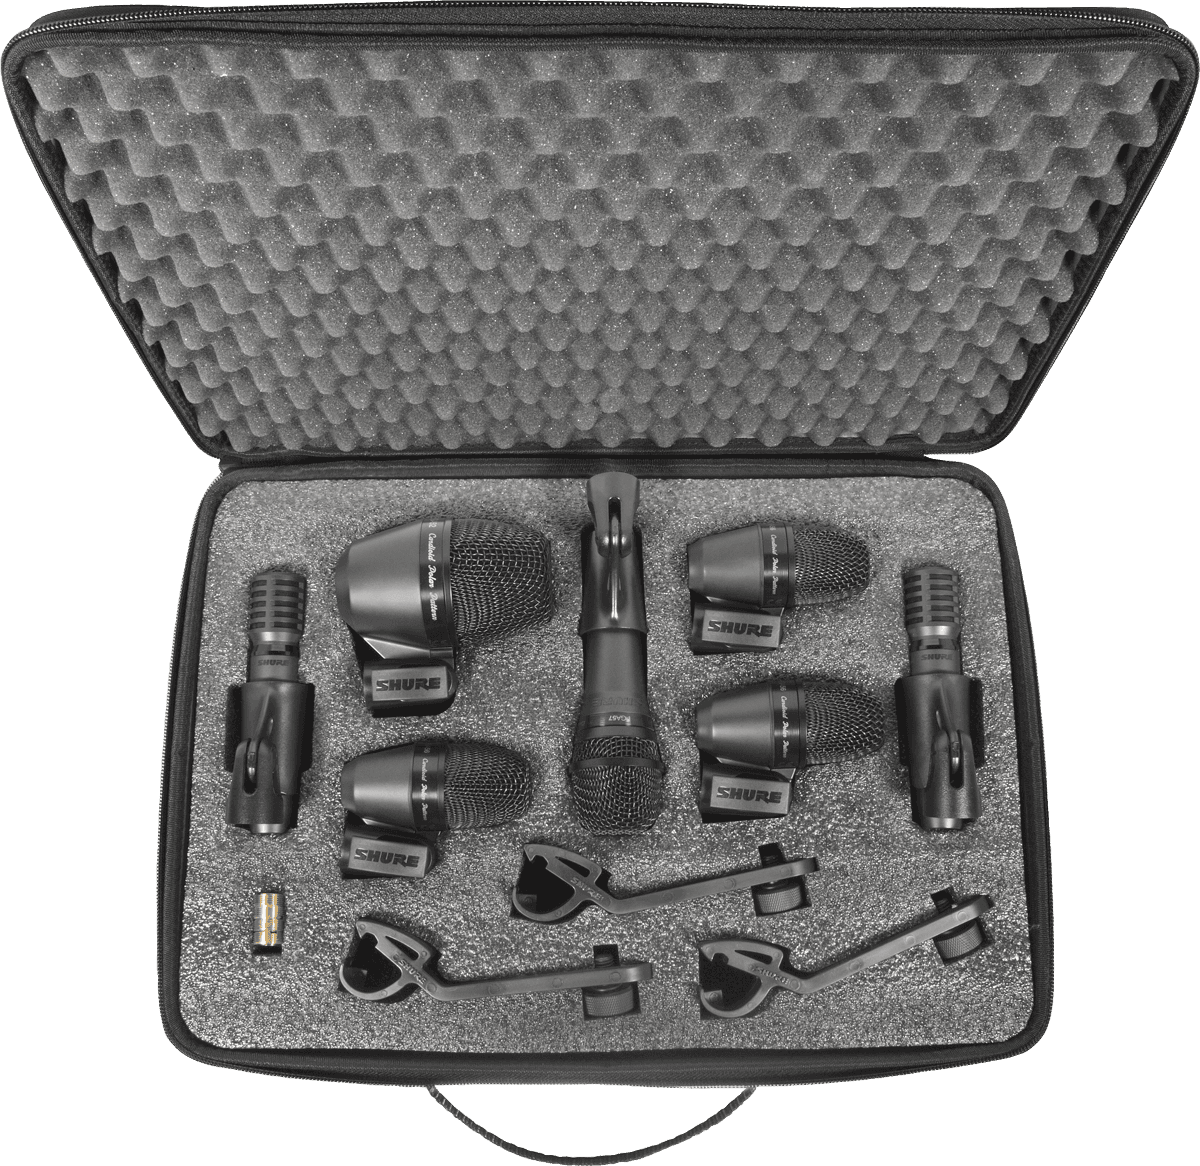 Shure Pga Drumkit 7 - Set de micrófonos con cables - Variation 1